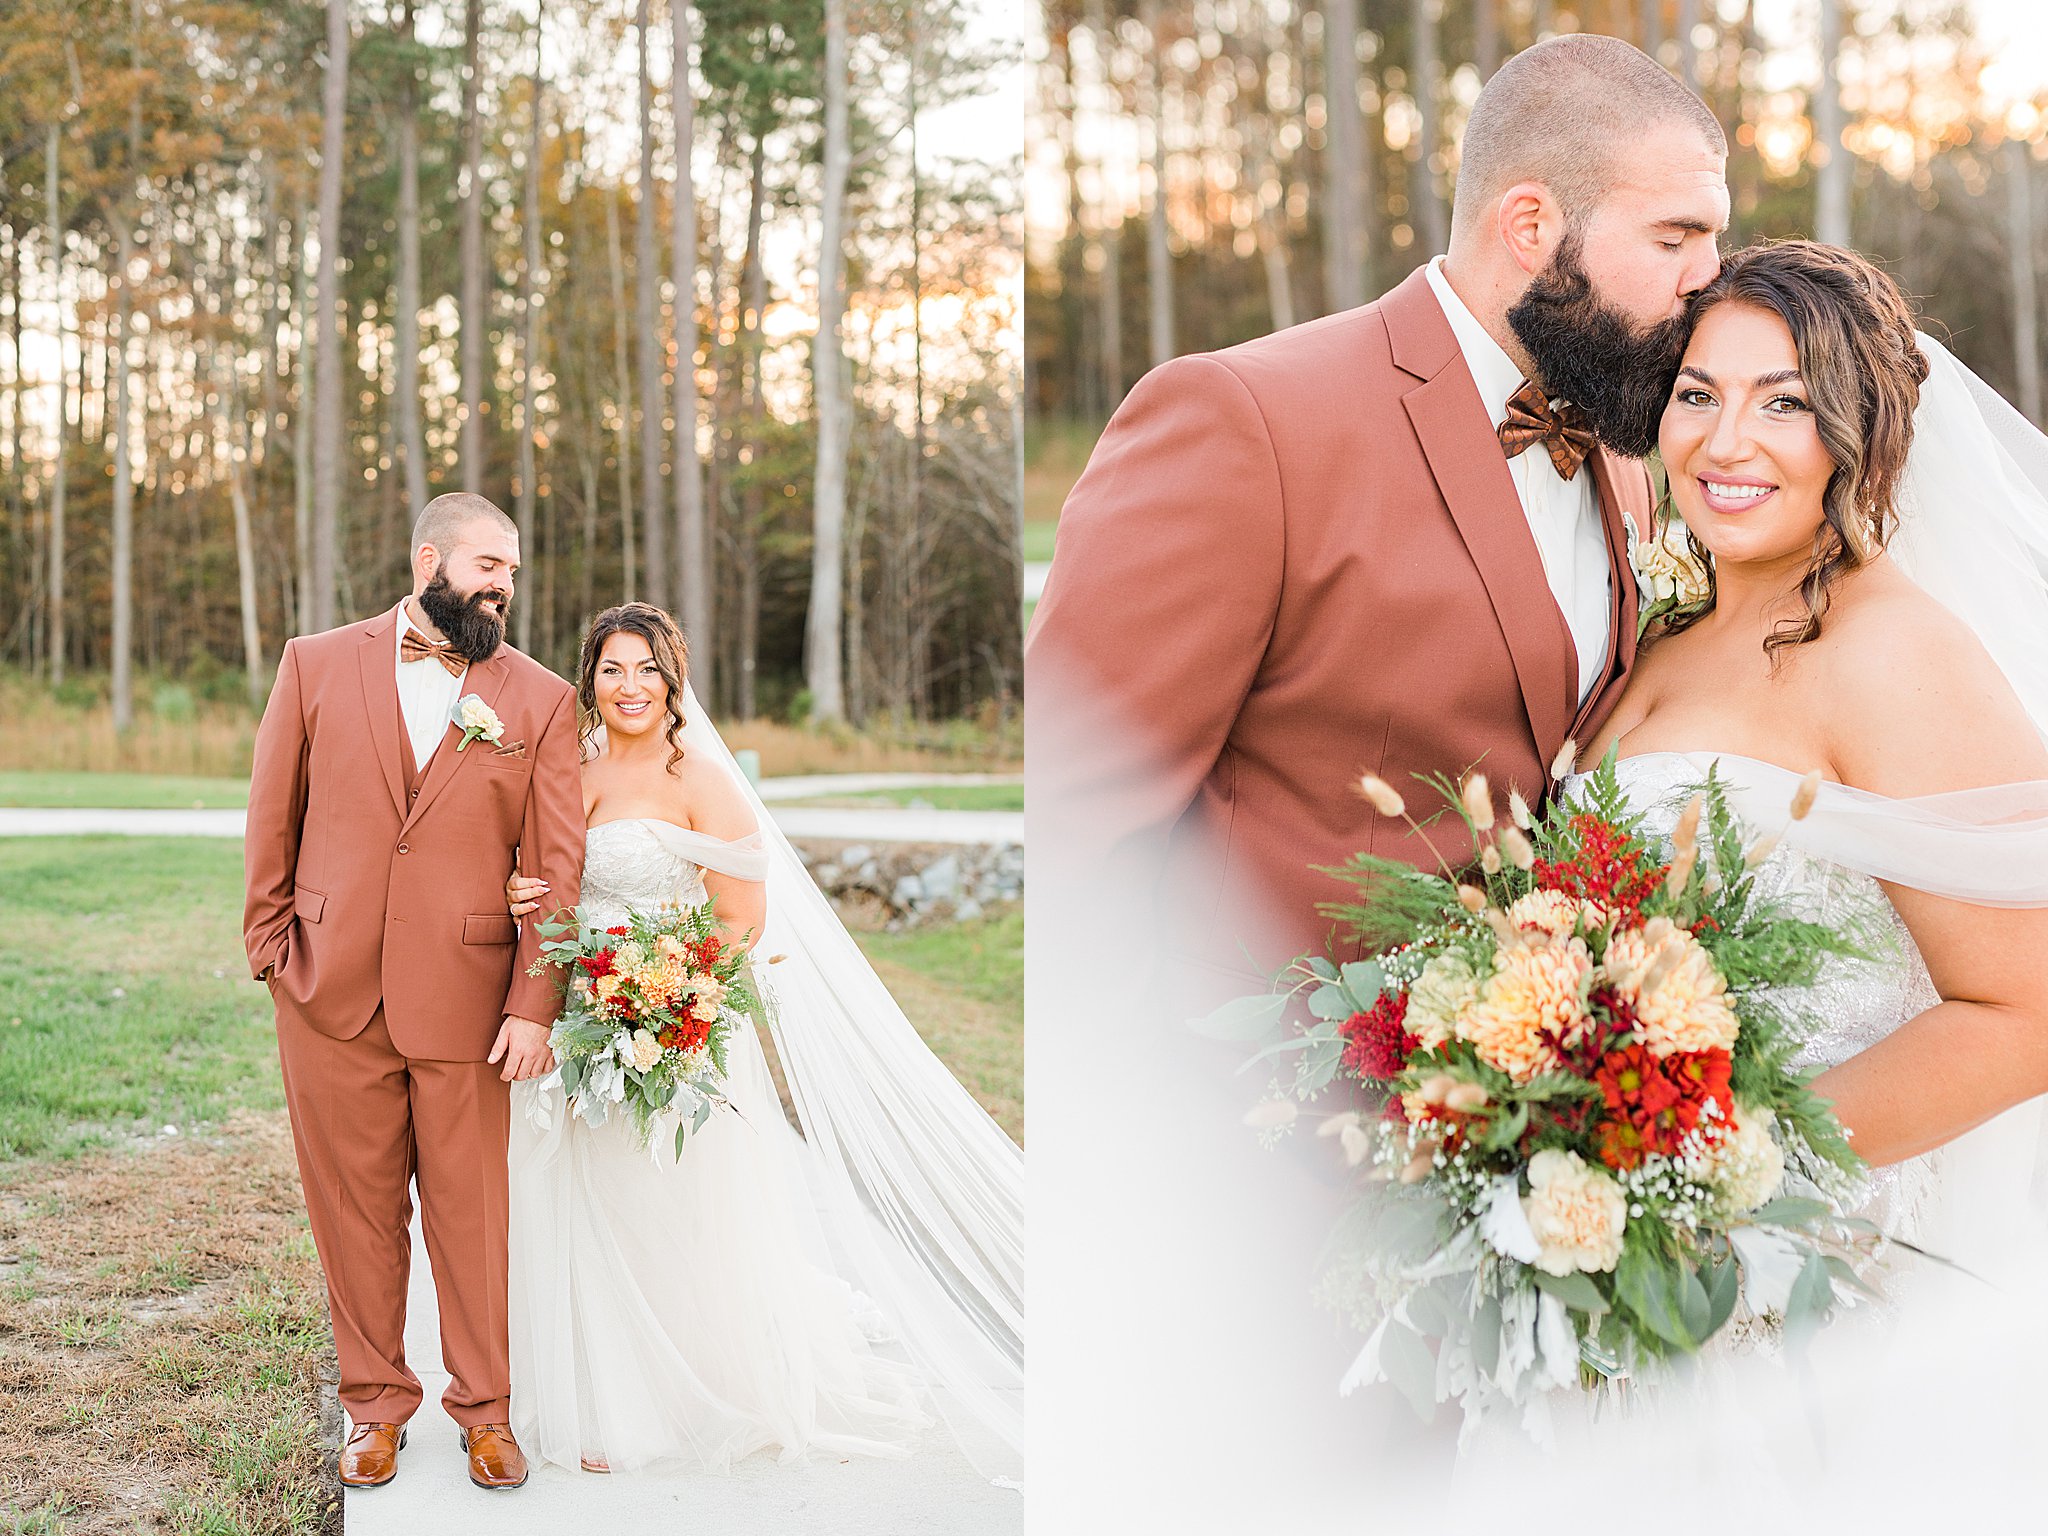 Choosing the Perfect Virginia Wedding Photographer by Vinluan Photography